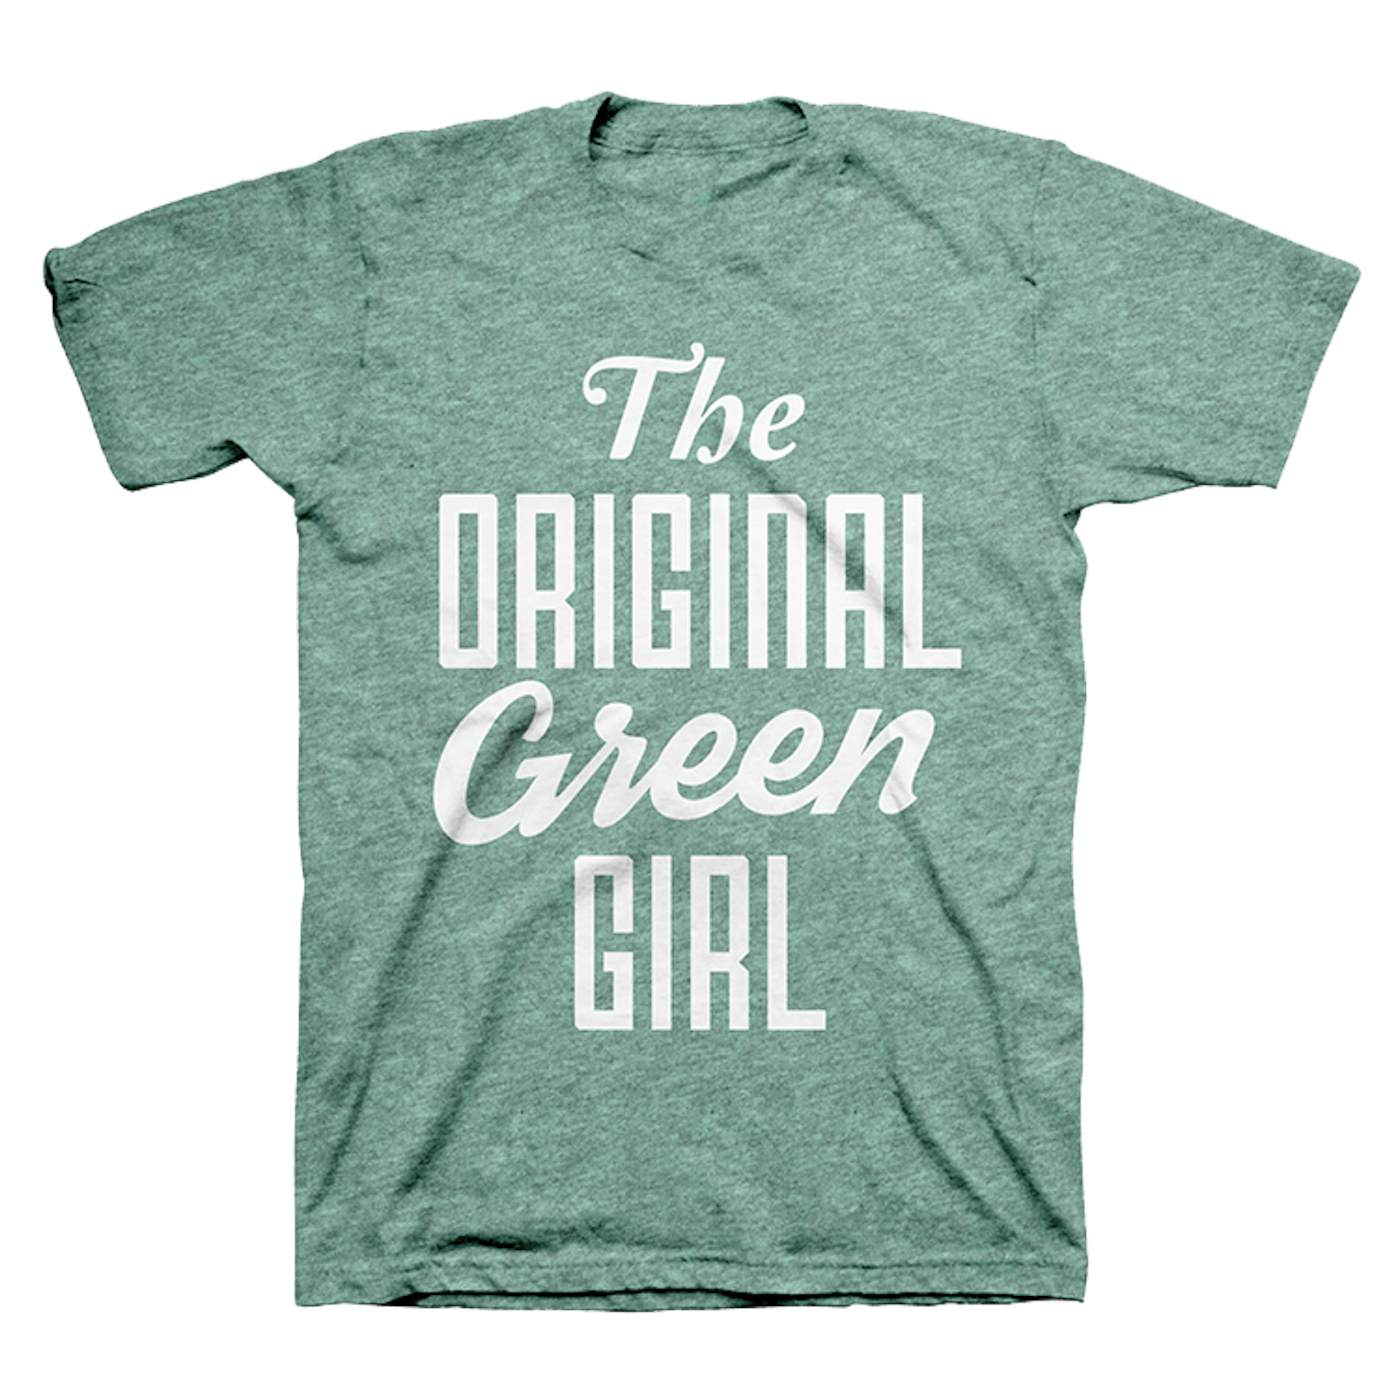 Idina Menzel Original Green Girl Tee